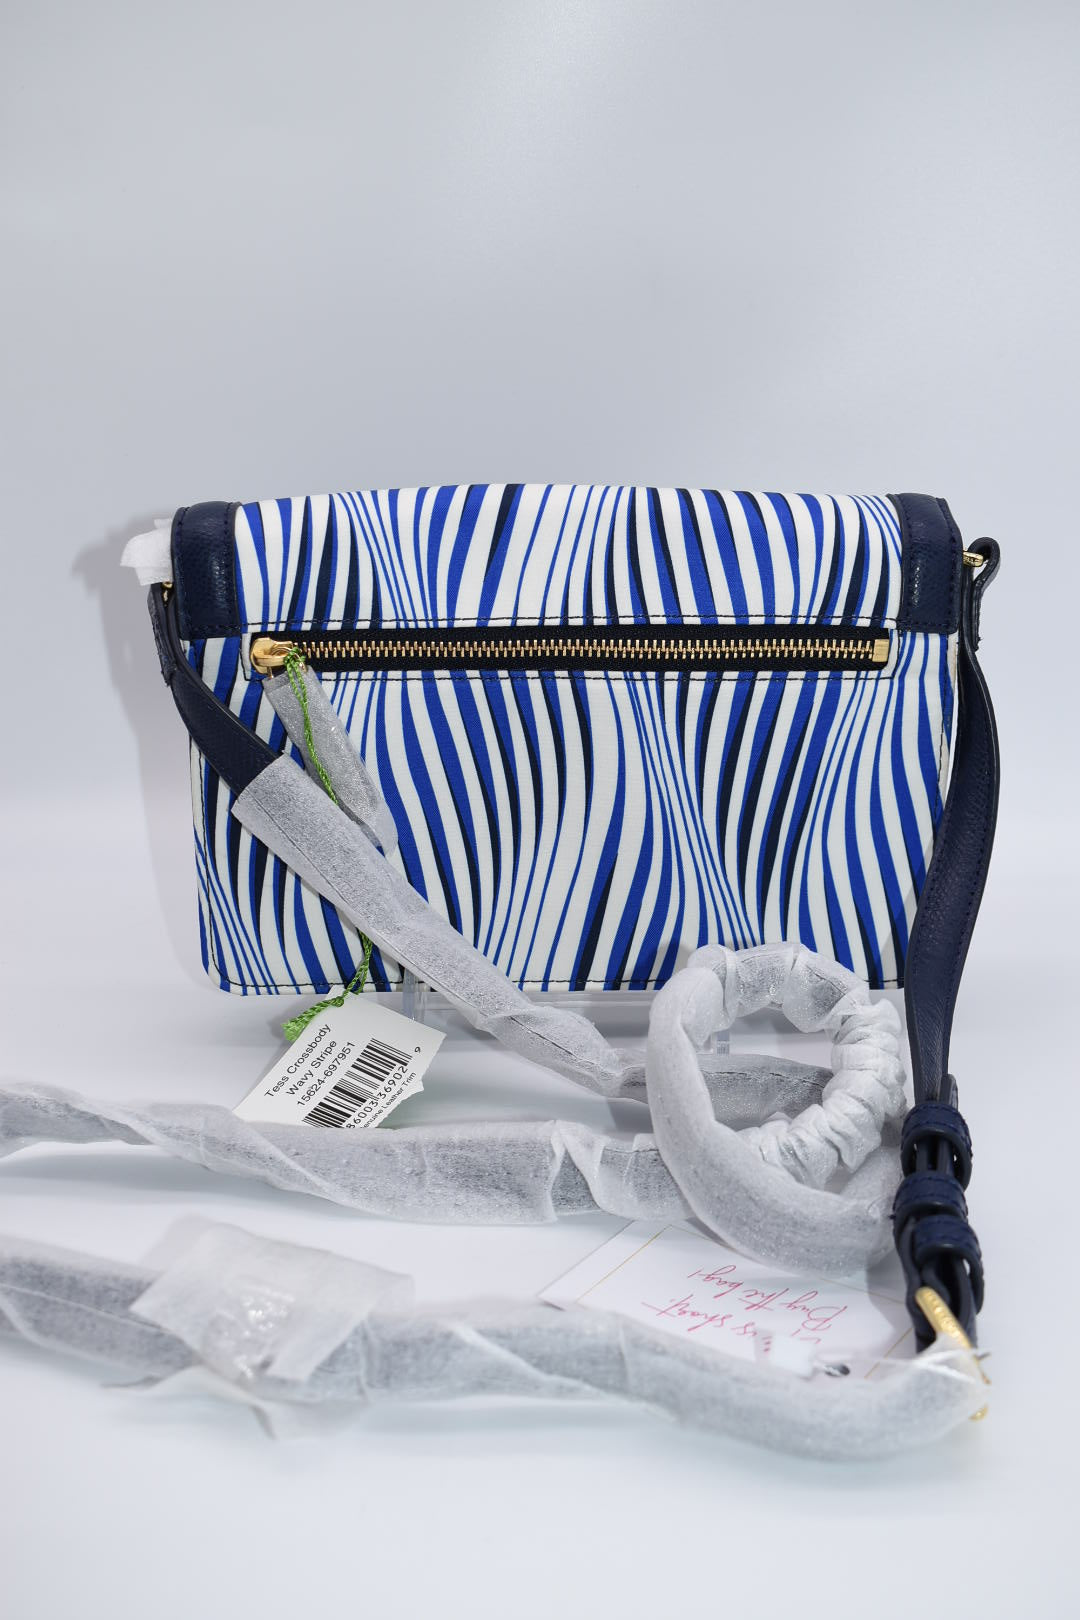 Vera Bradley Tess Crossbody Bag in "Wavy Stripe" Pattern